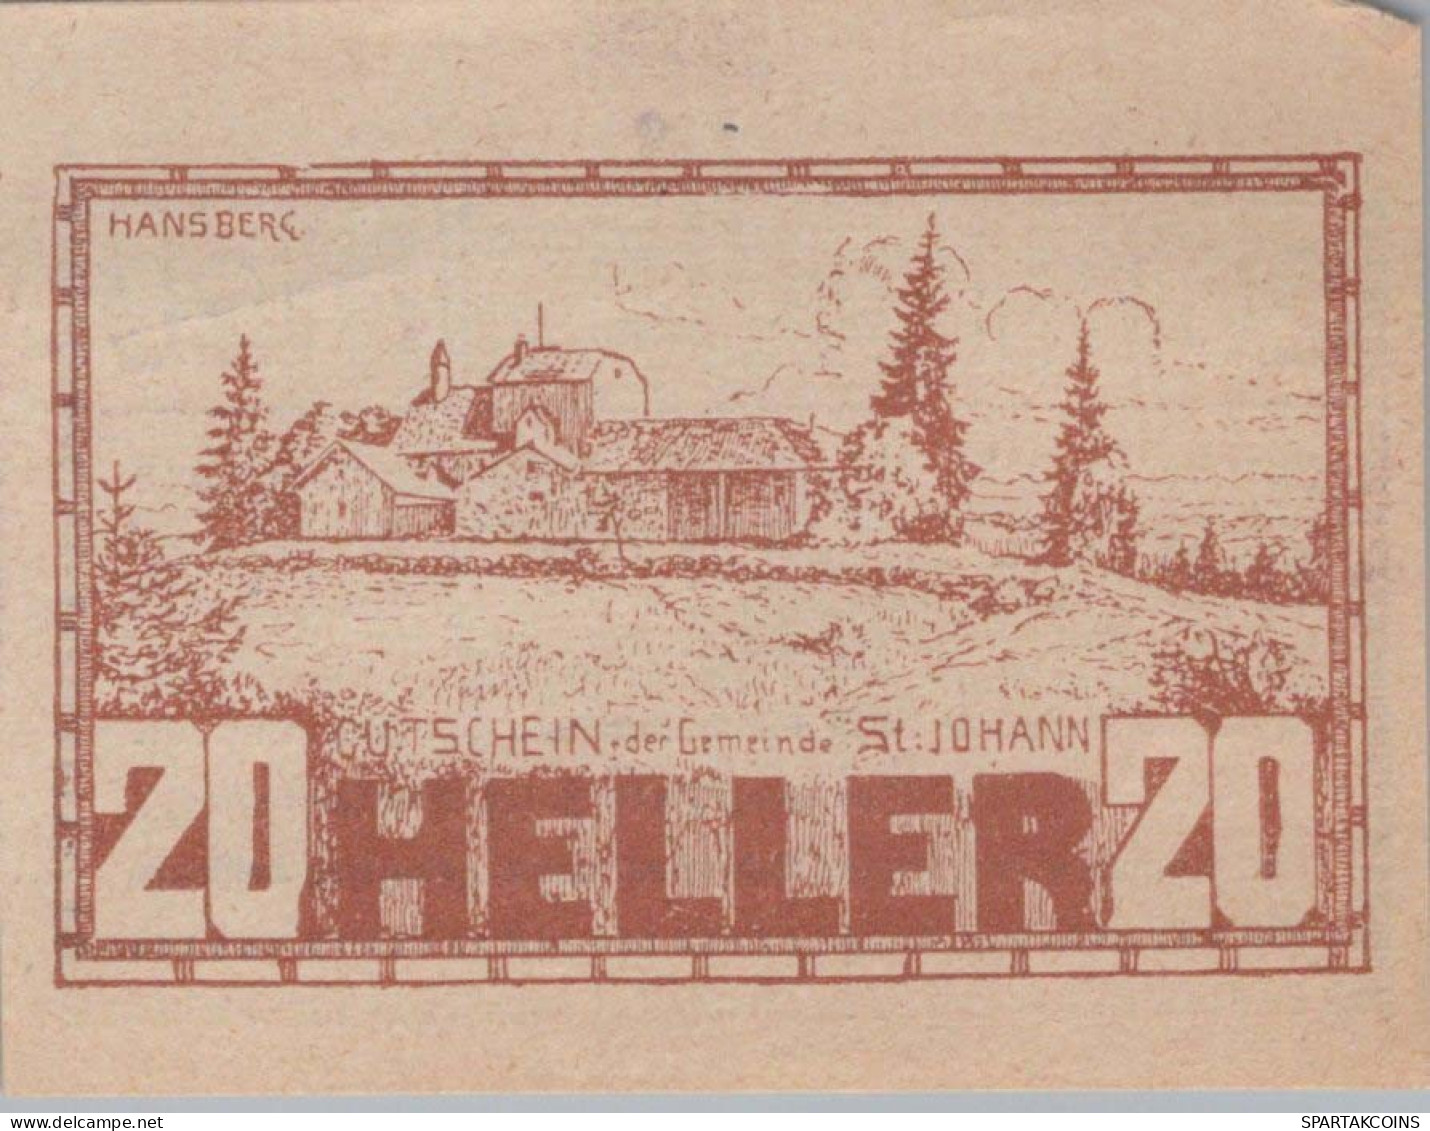 20 HELLER 1920 Stadt SANKT JOHANN AM WIMBERG Oberösterreich Österreich #PE683 - Lokale Ausgaben